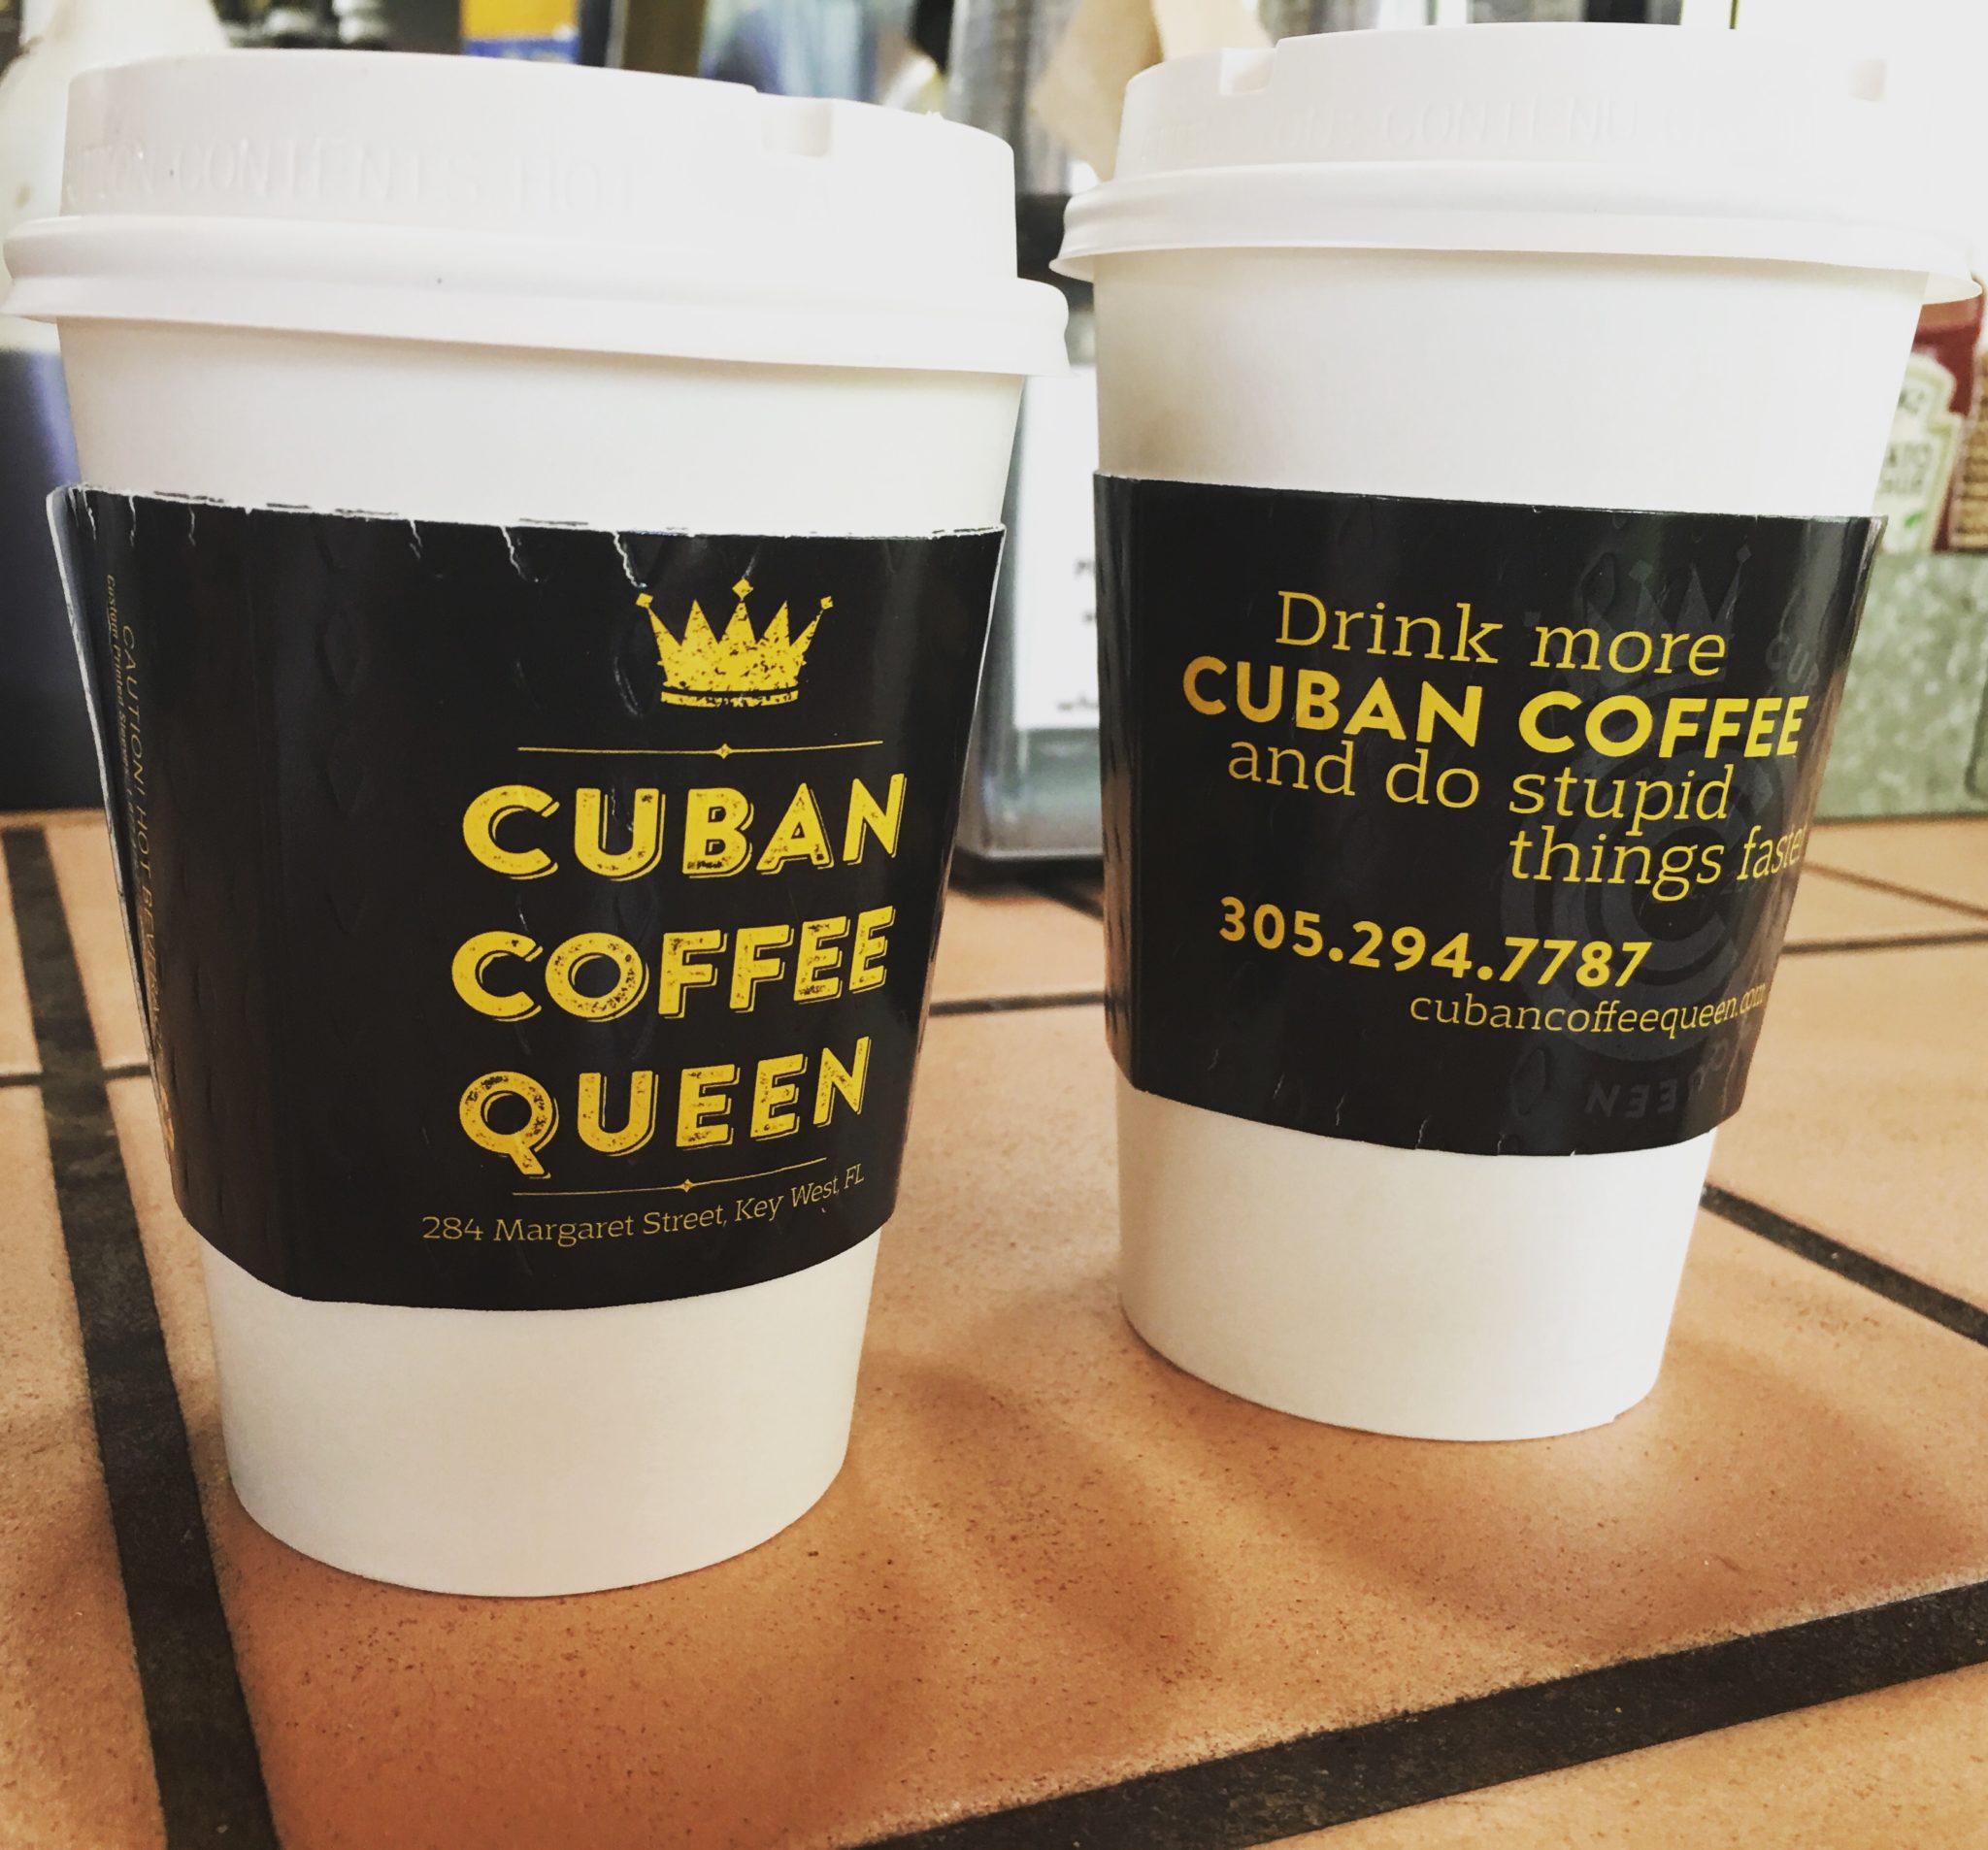 3 Best Items on the Cuban Coffee Queen Key West Menu